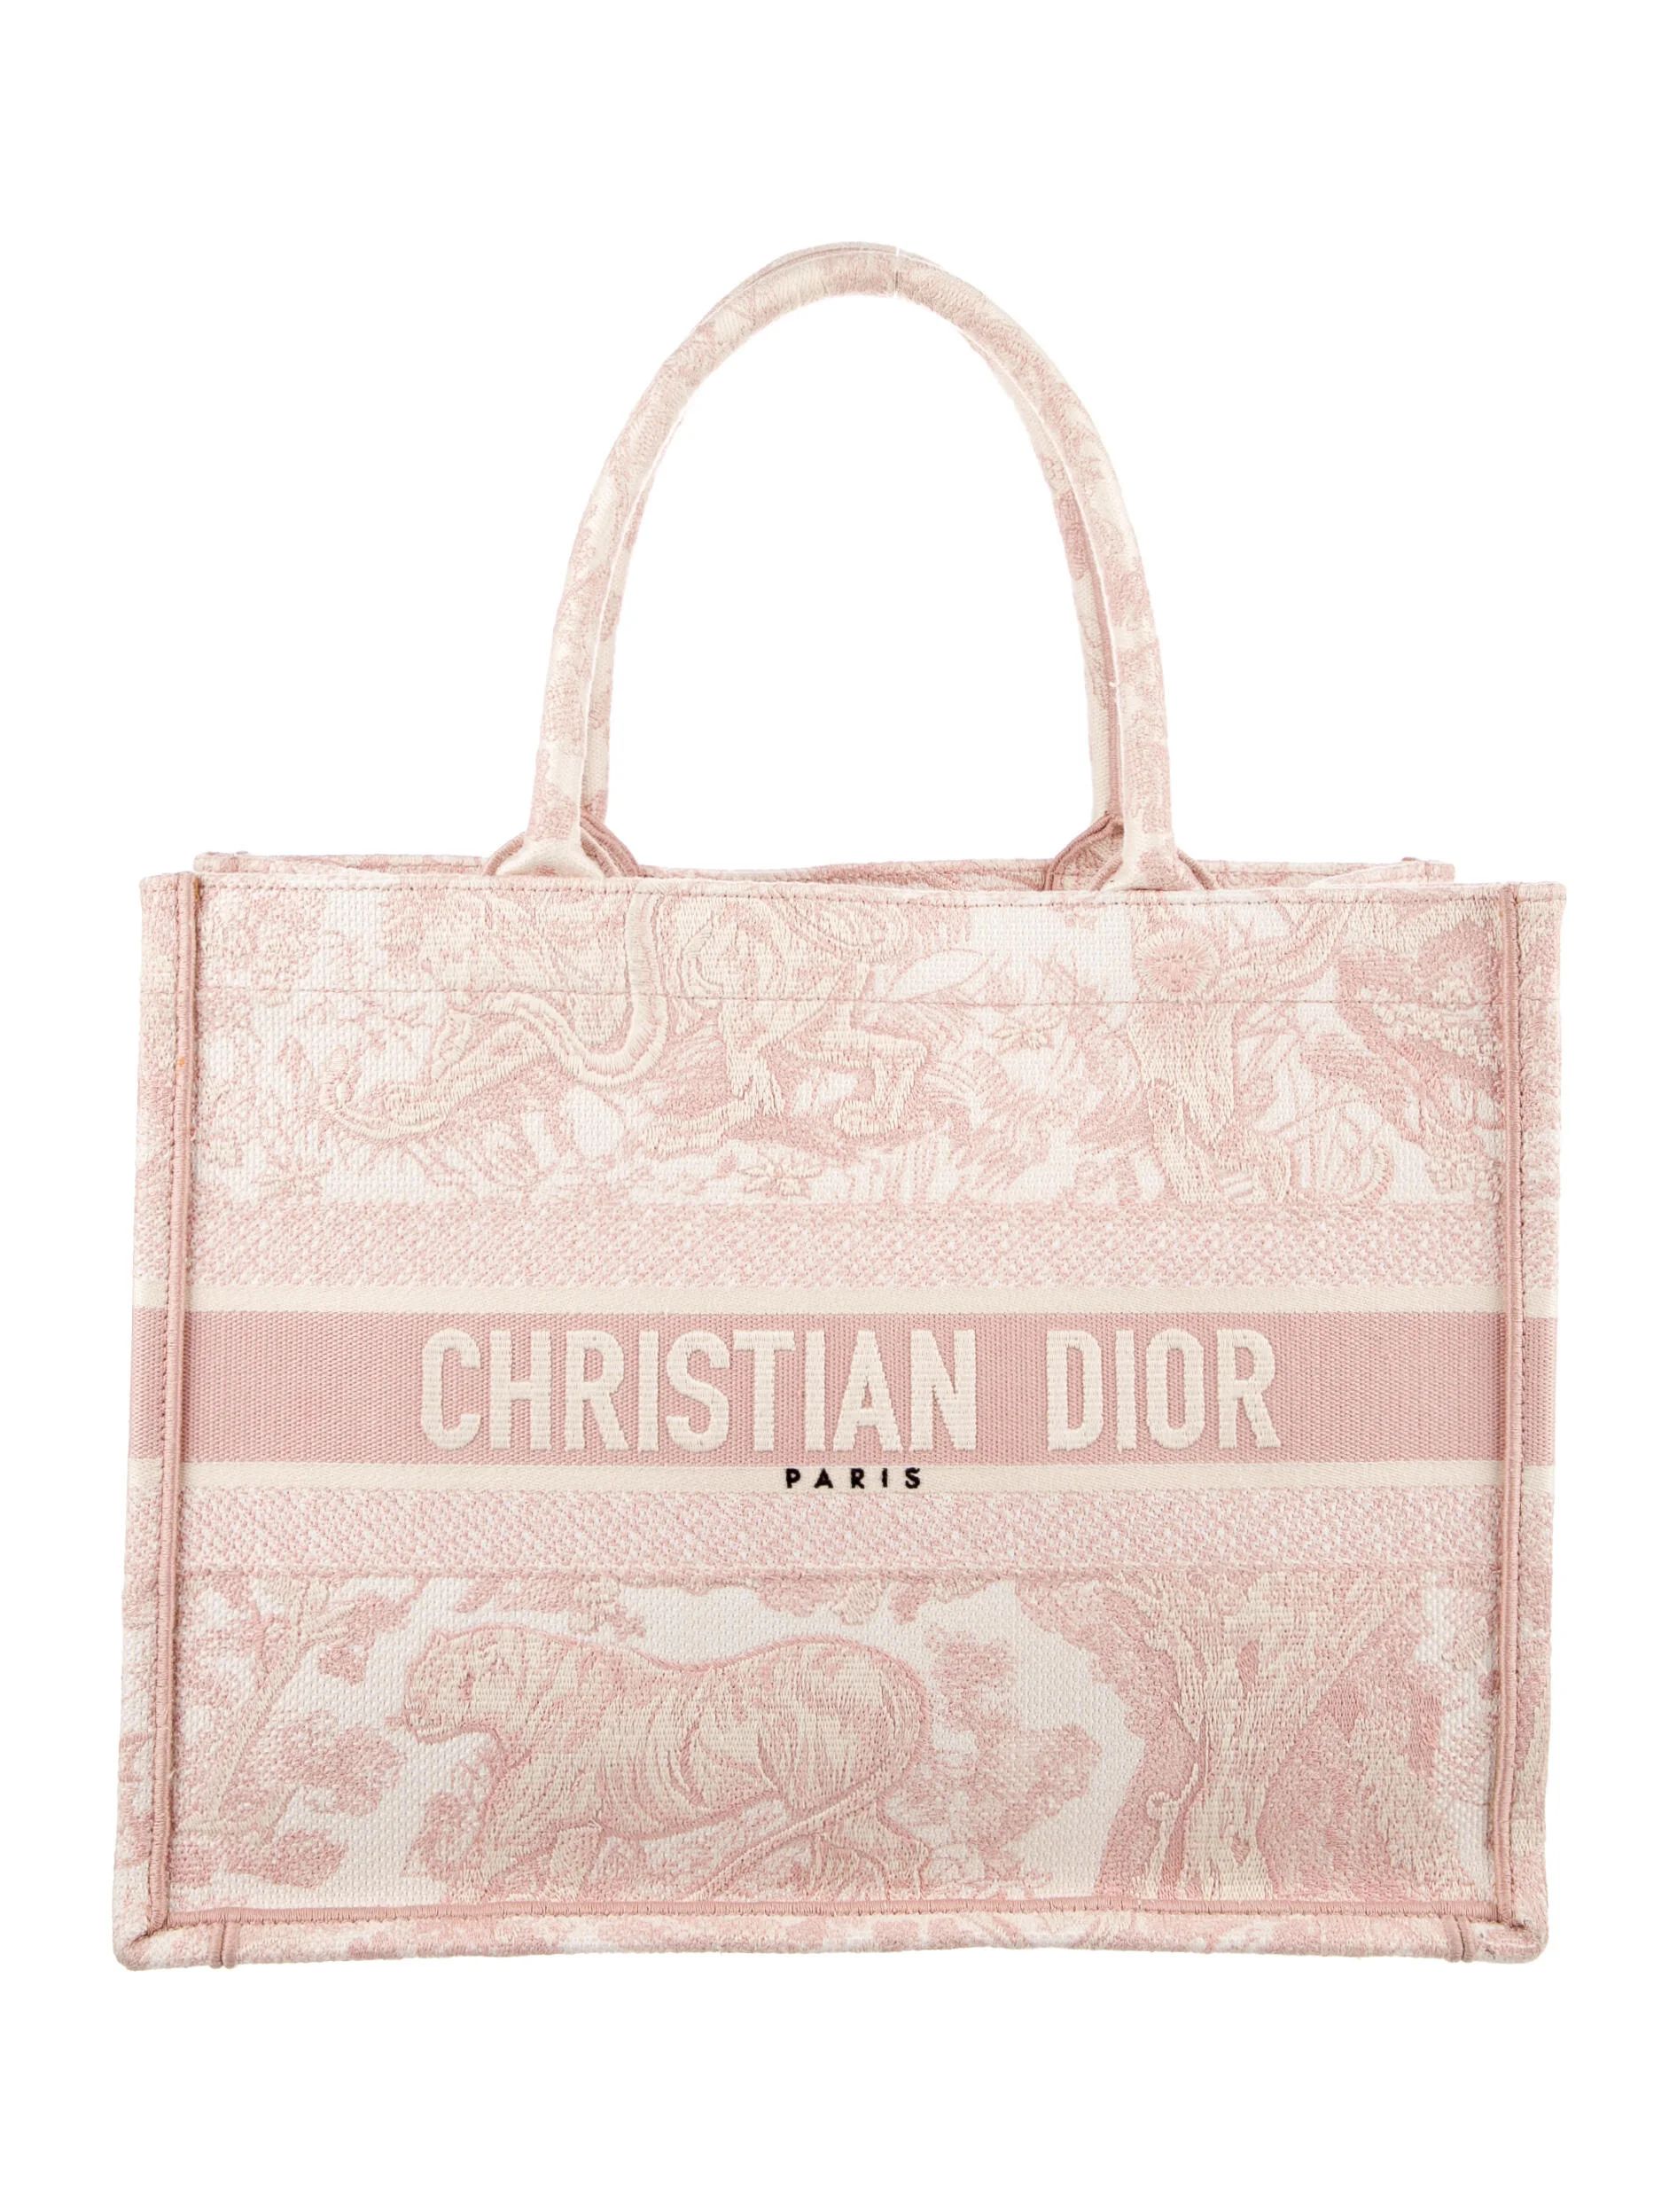 Christian Dior | The RealReal